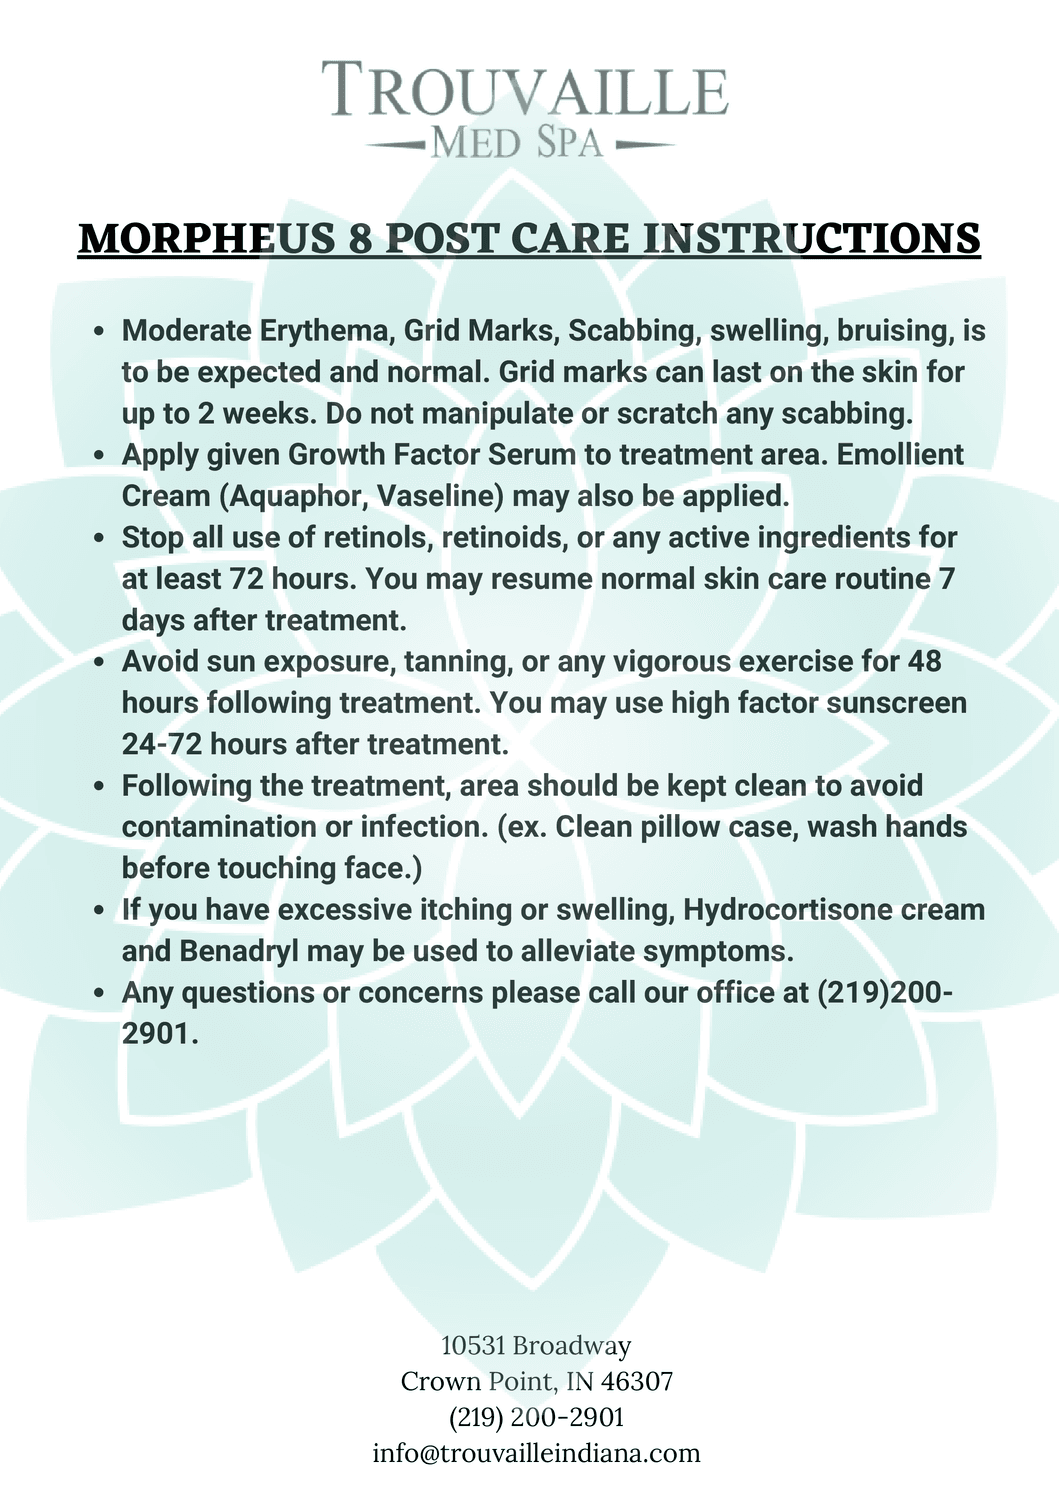 Post Care Instructions PDF